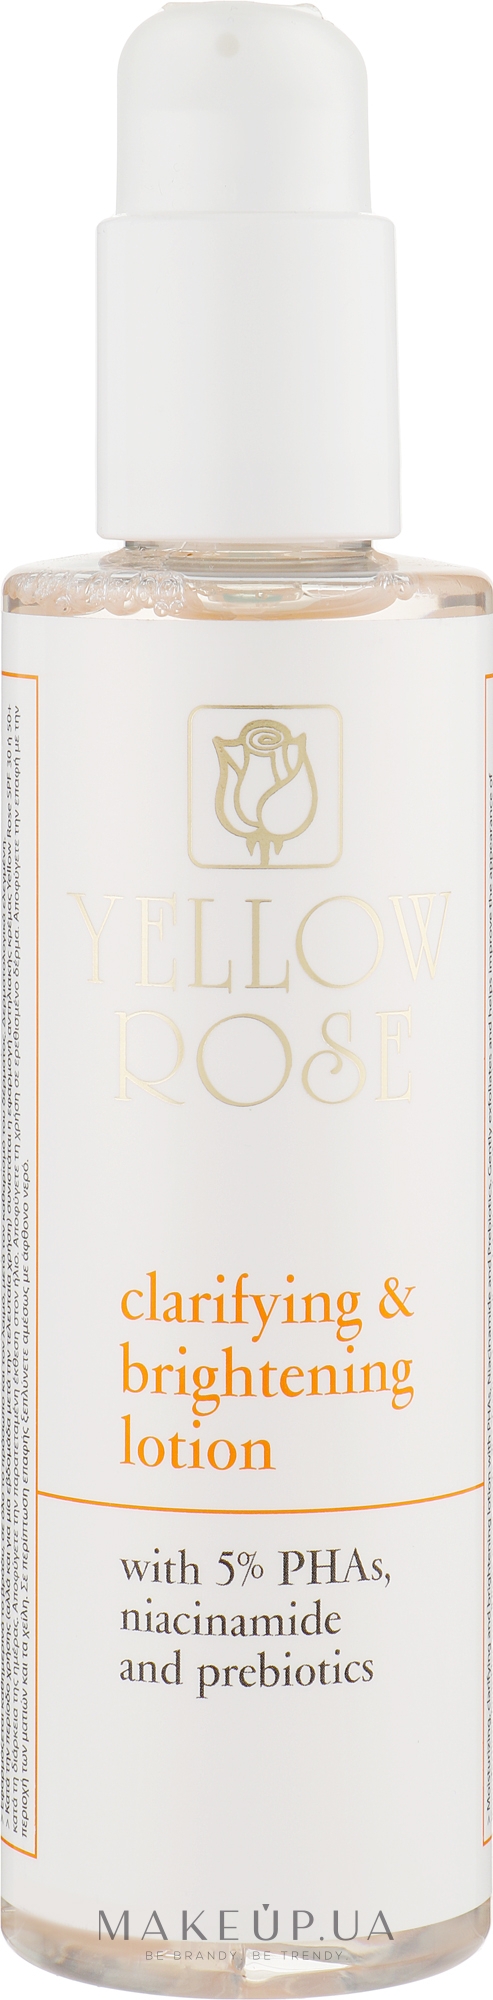 Очищающий и выравнивающий тон кожи лосьон - Yellow Rose Clarifying & Brightening Lotion — фото 200ml